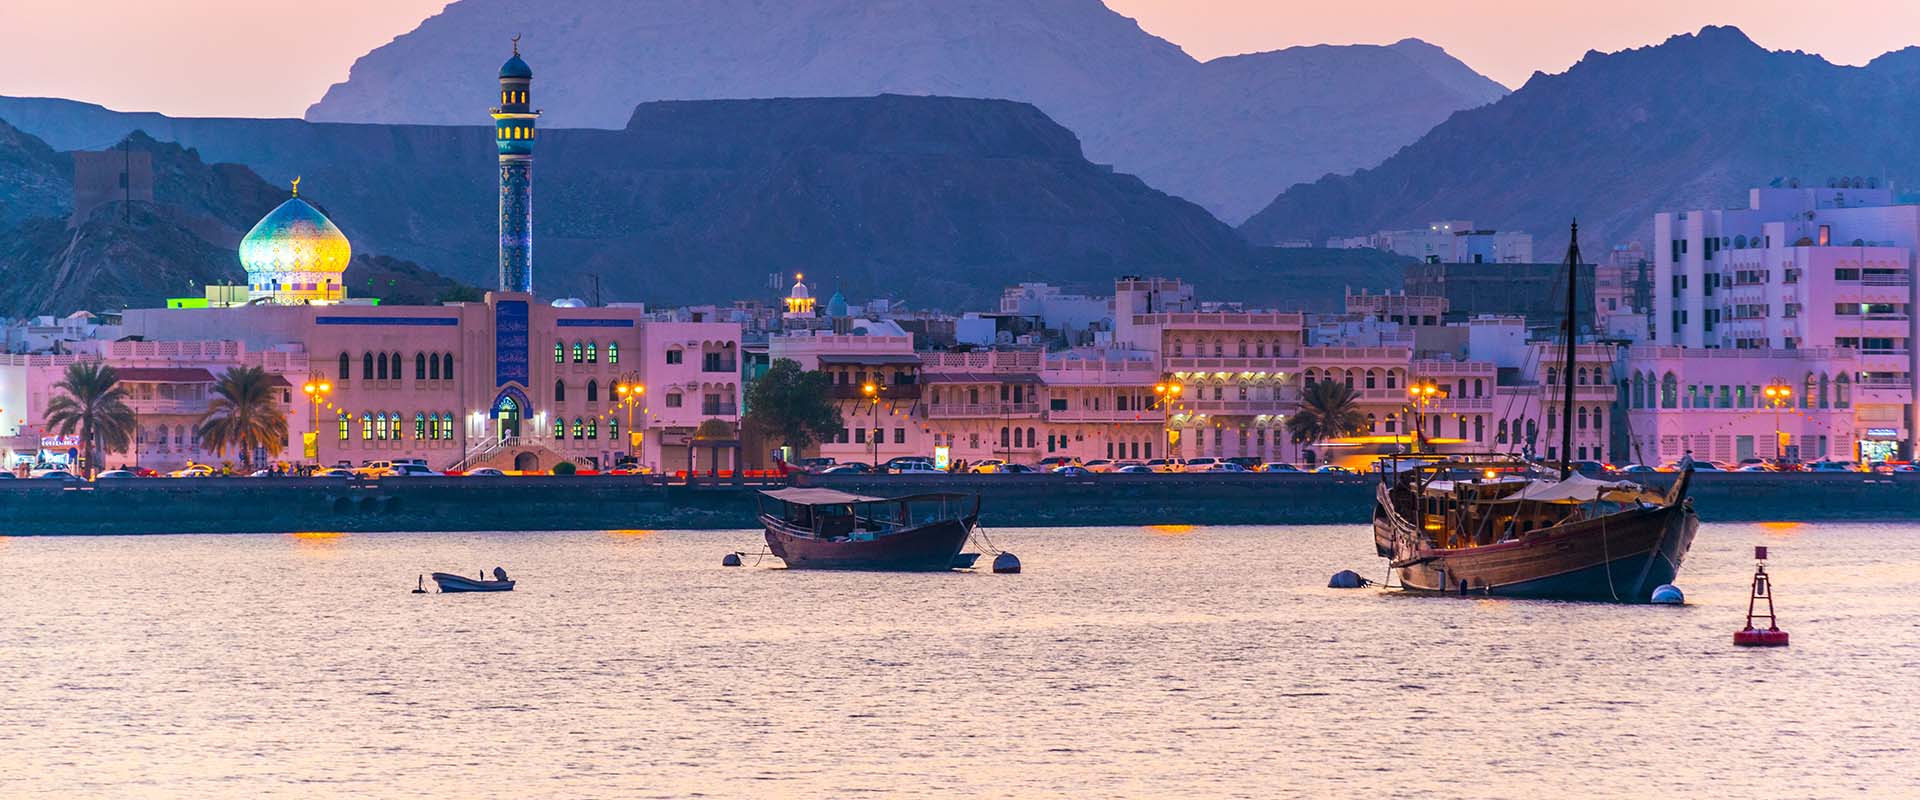 Crociere Avventura in Oman - LiveAboard.com